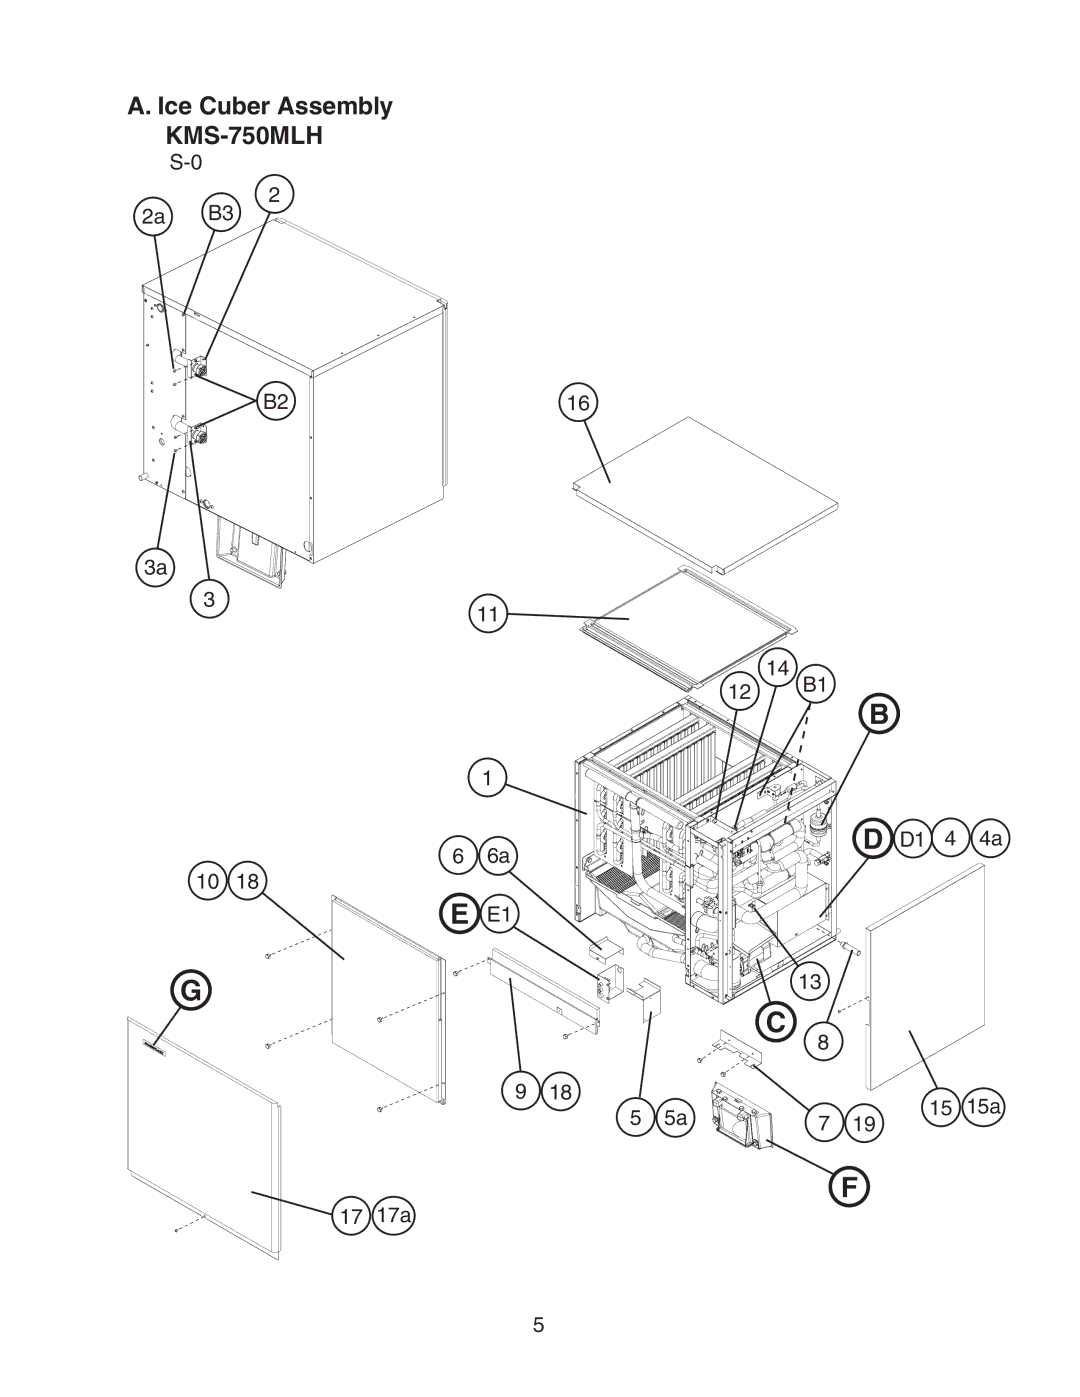 Hoshizaki manual Ice Cuber Assembly KMS-750MLH, 2a B3 12 14 B1 D1 4 4a 17 17a 15 15a 